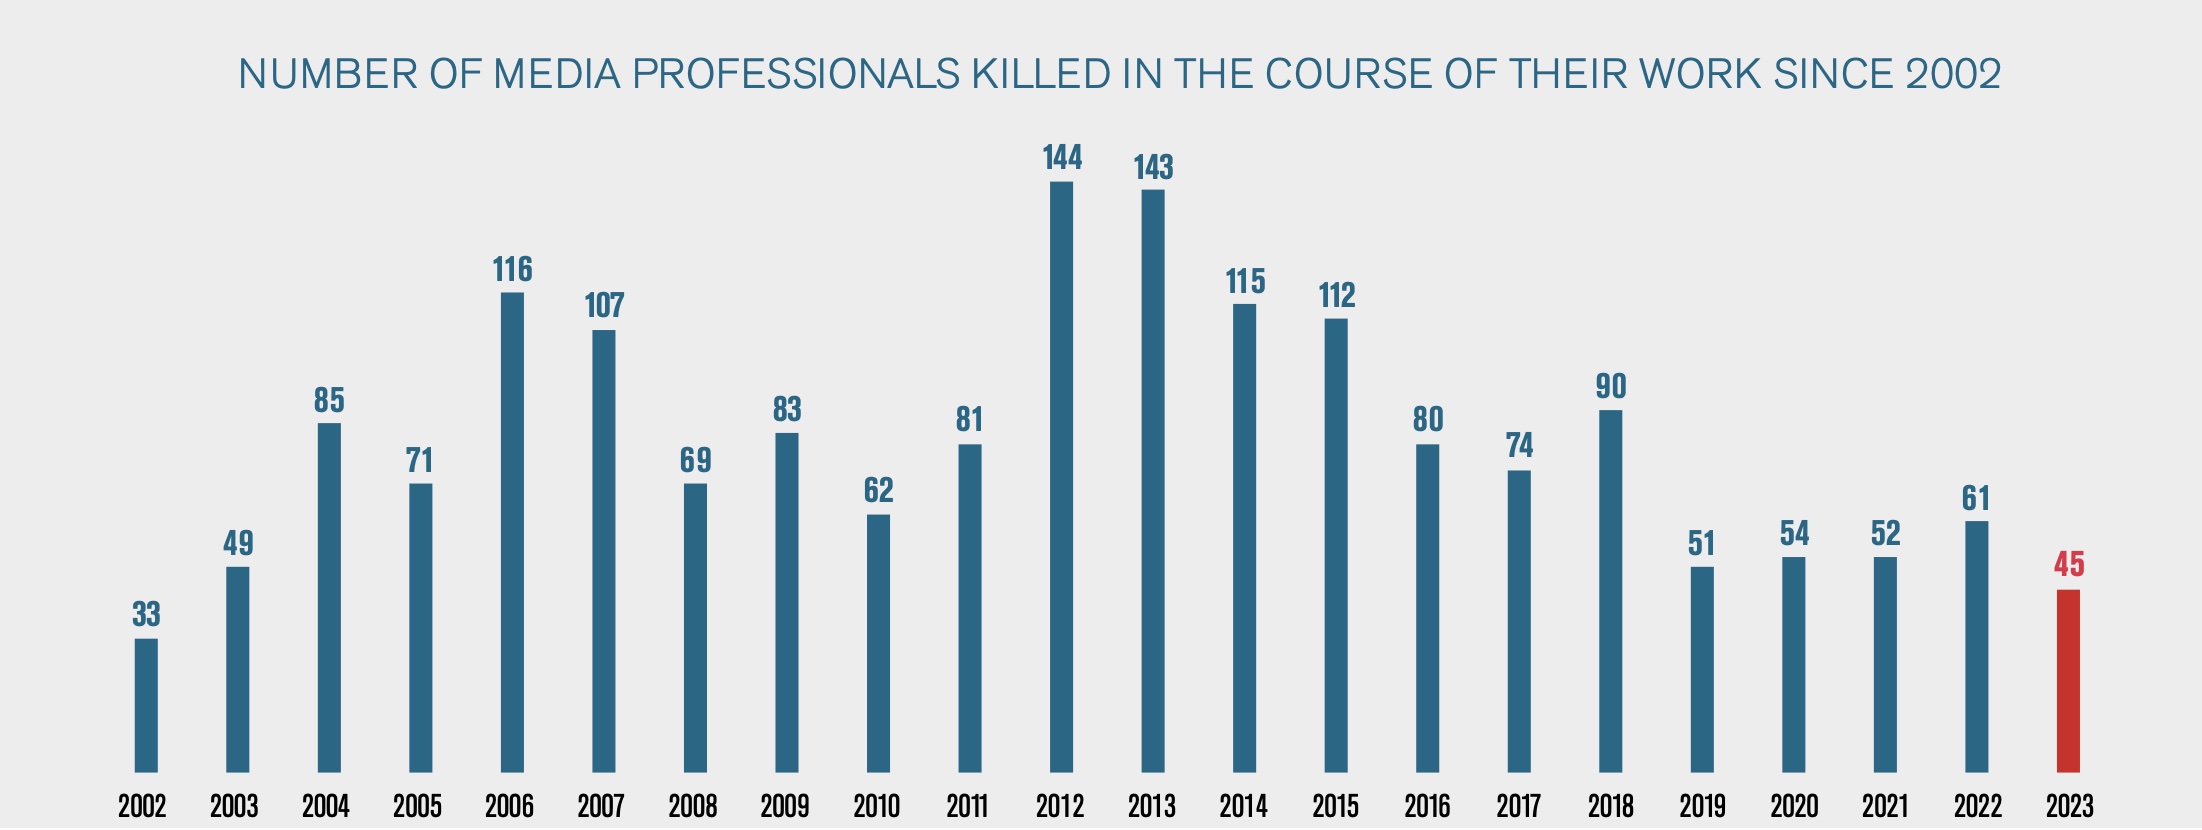 Gráfico mostra mortes de jornalistas ano a ano no mundo desde 2002